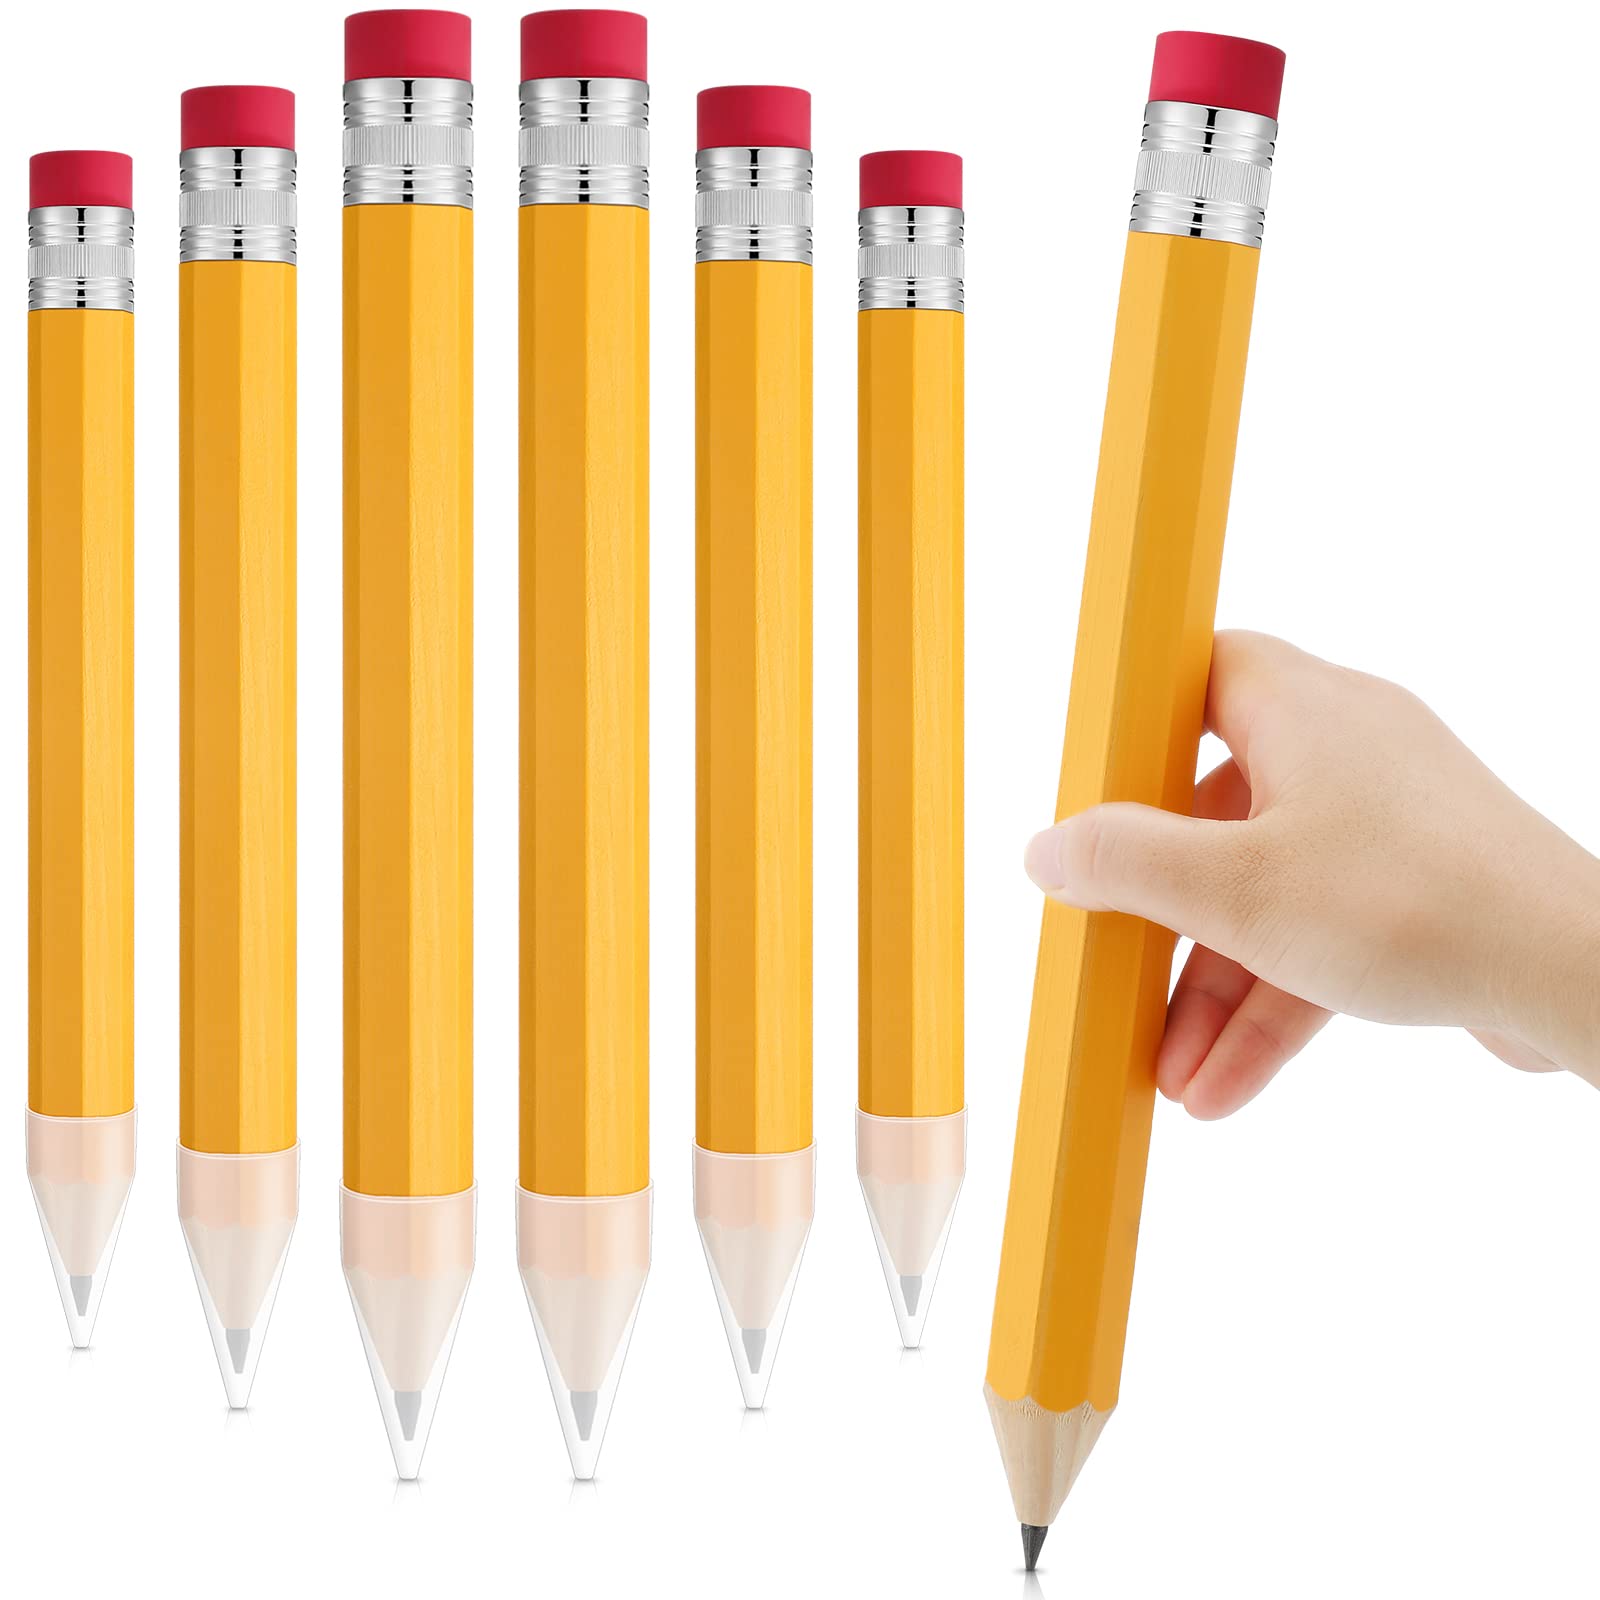 Pencil Clip Art - Kids Pencil Images